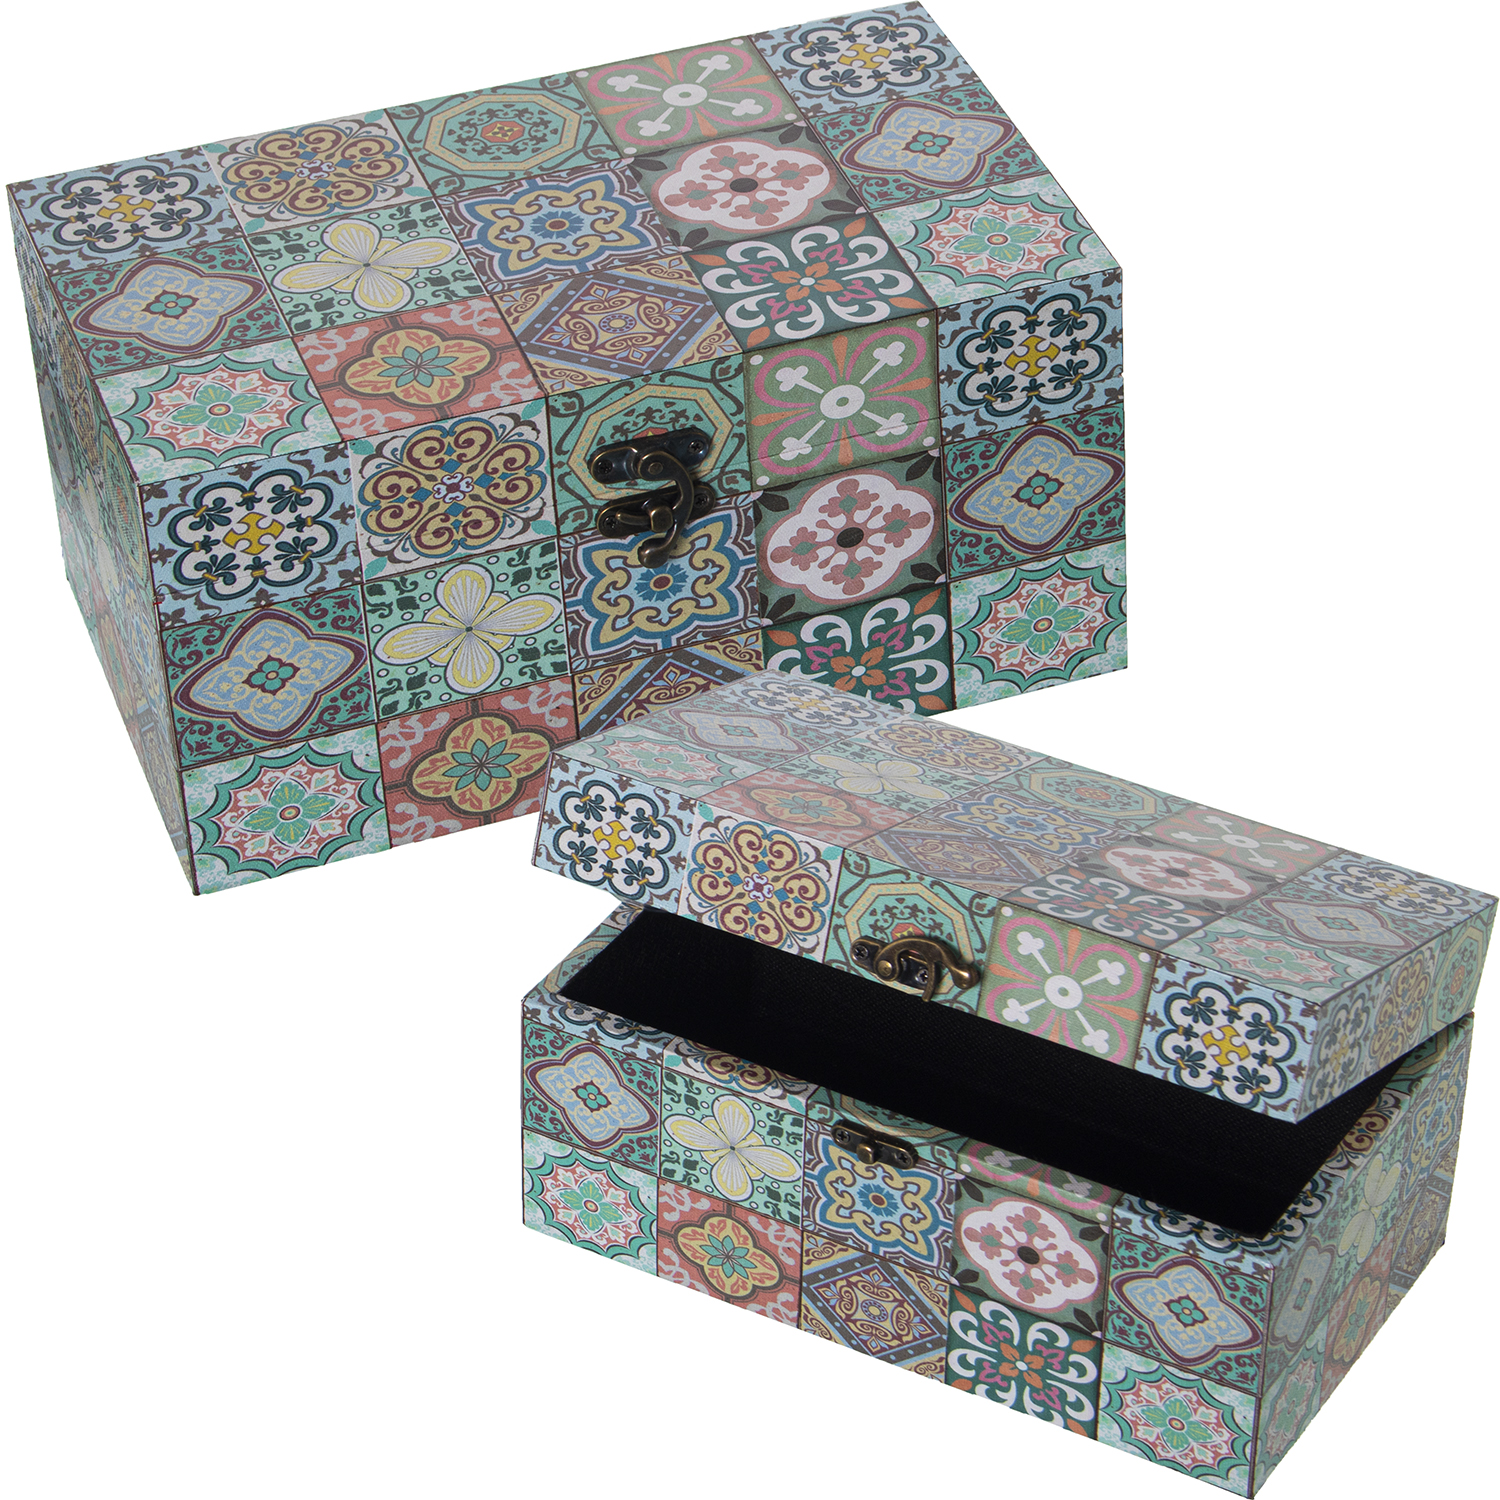 34066-set-2-deco-cajas-azulejo.gif